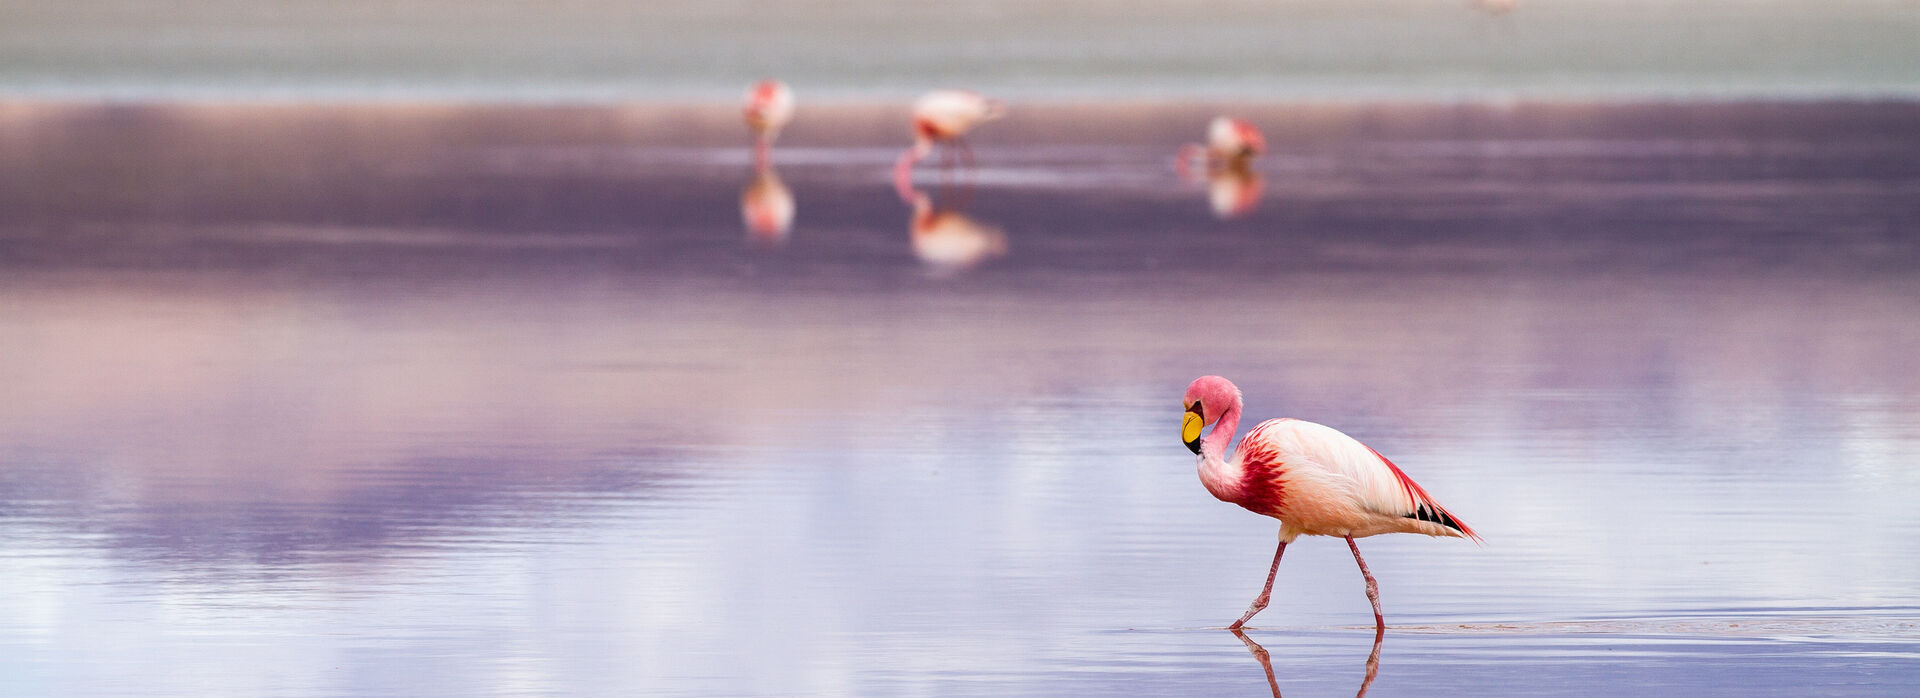 Flamingo in salt flats